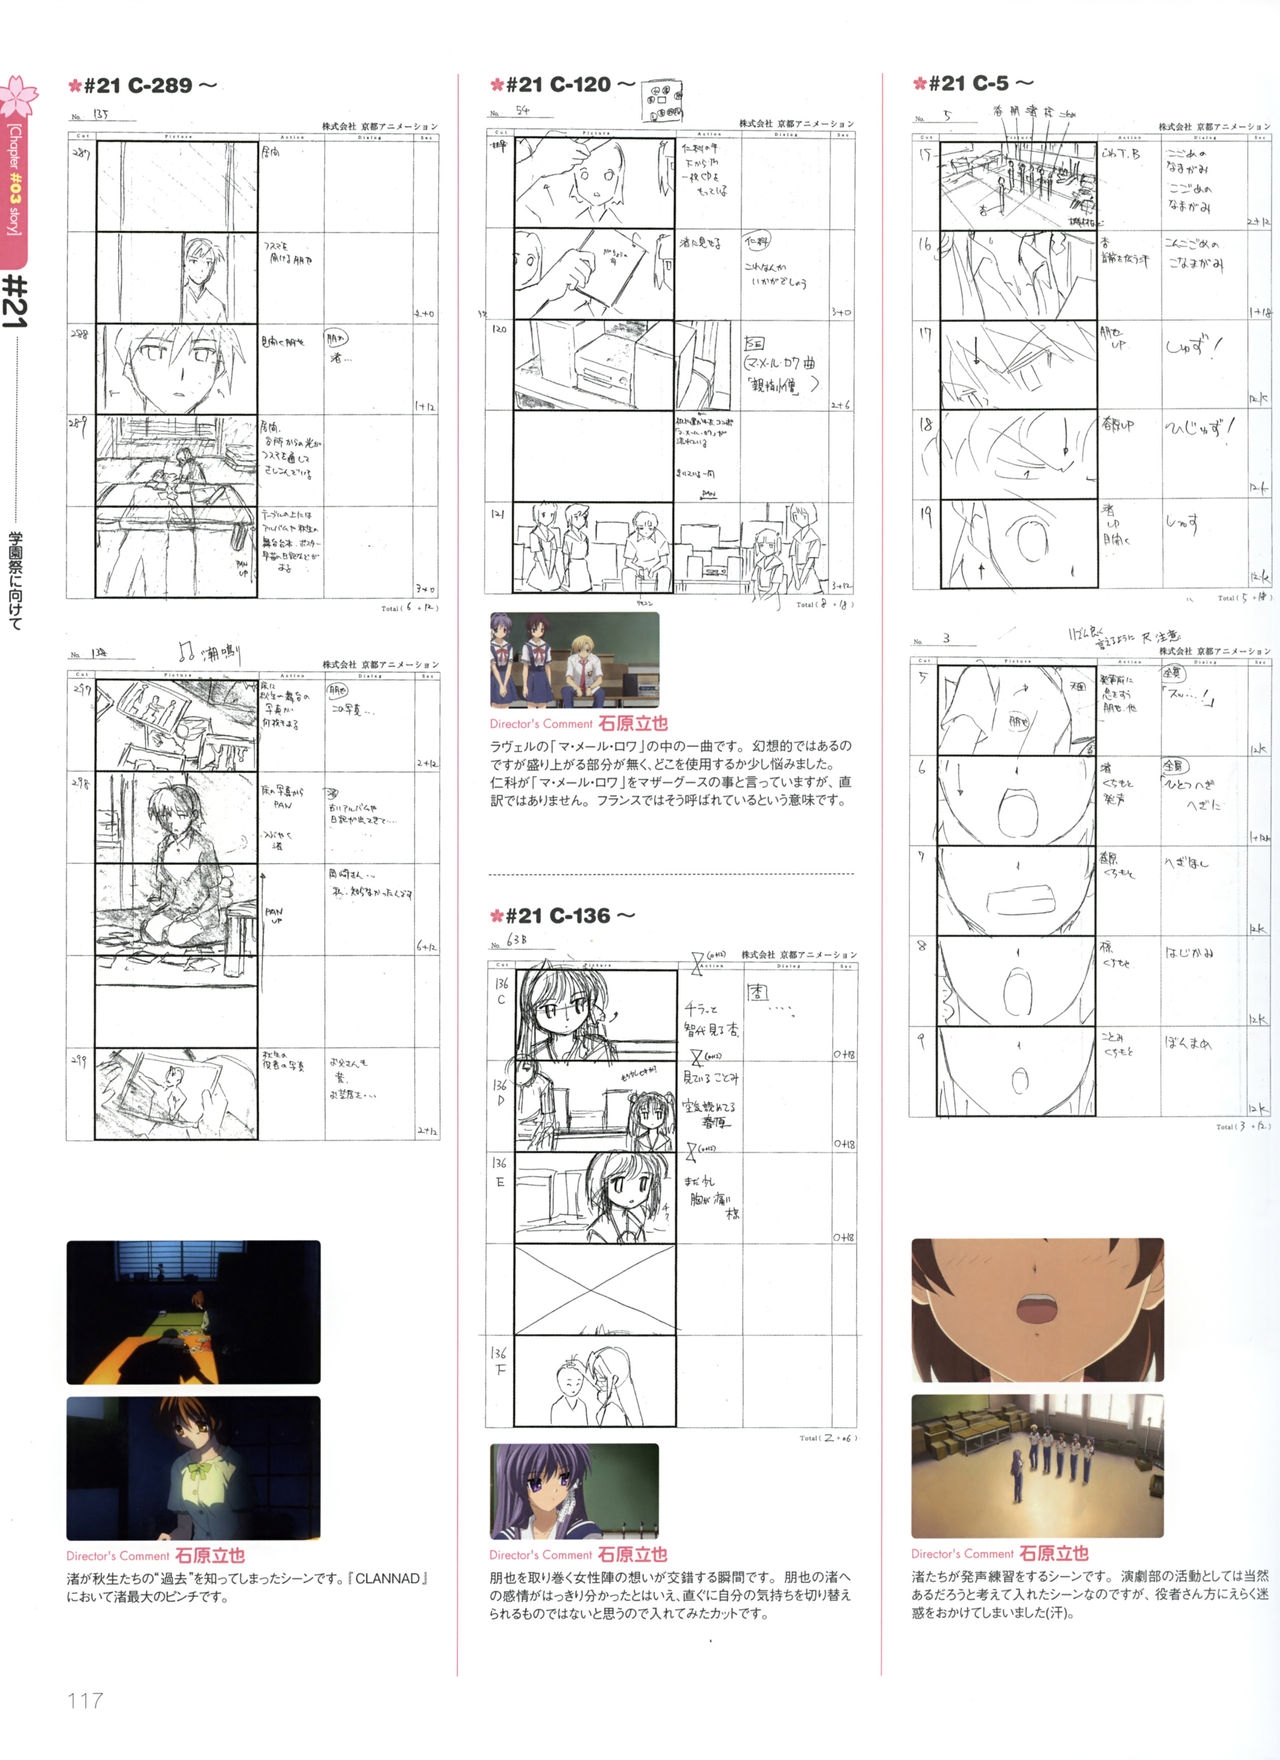 Clannad TV Animation Visual Fan Book 120